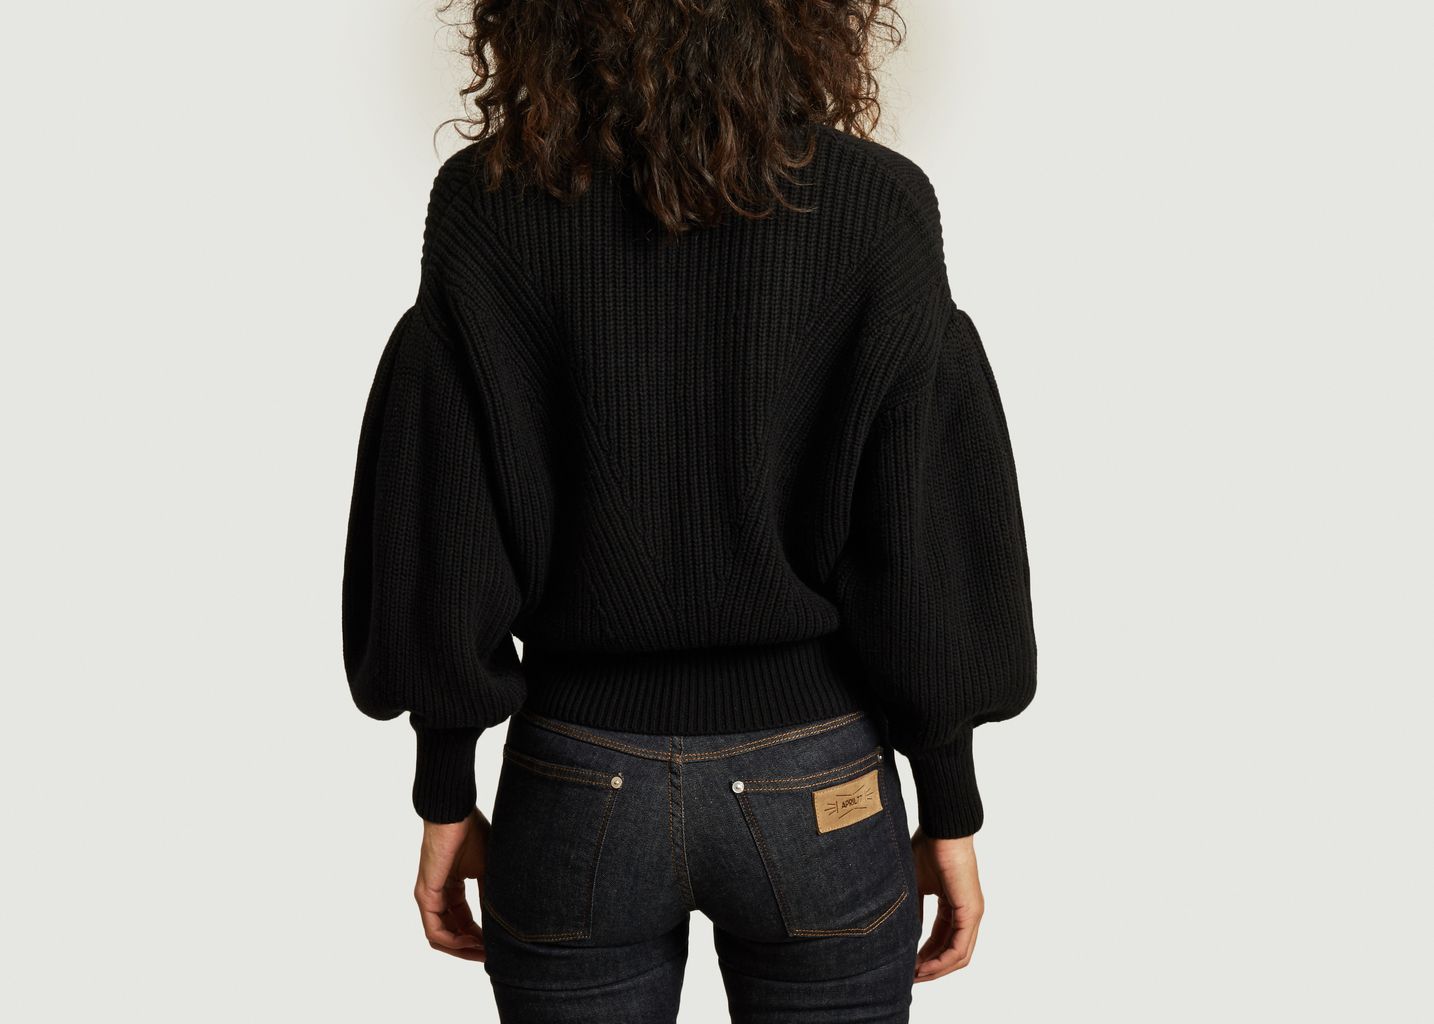 Kiria puffed sleeves sweater - IRO